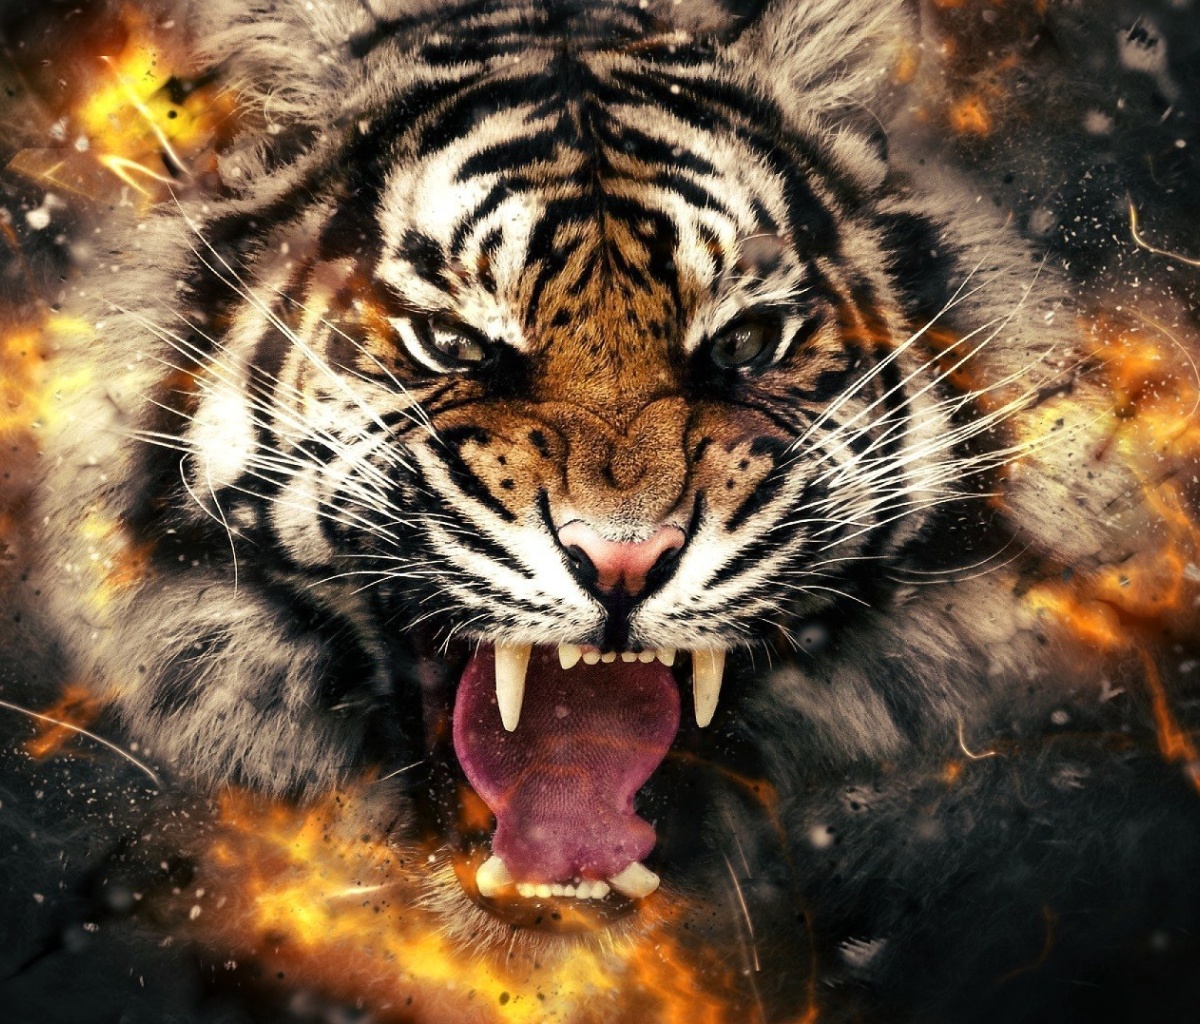 Fire Tiger Wallpaper for Samsung Galaxy Tab 4G LTE